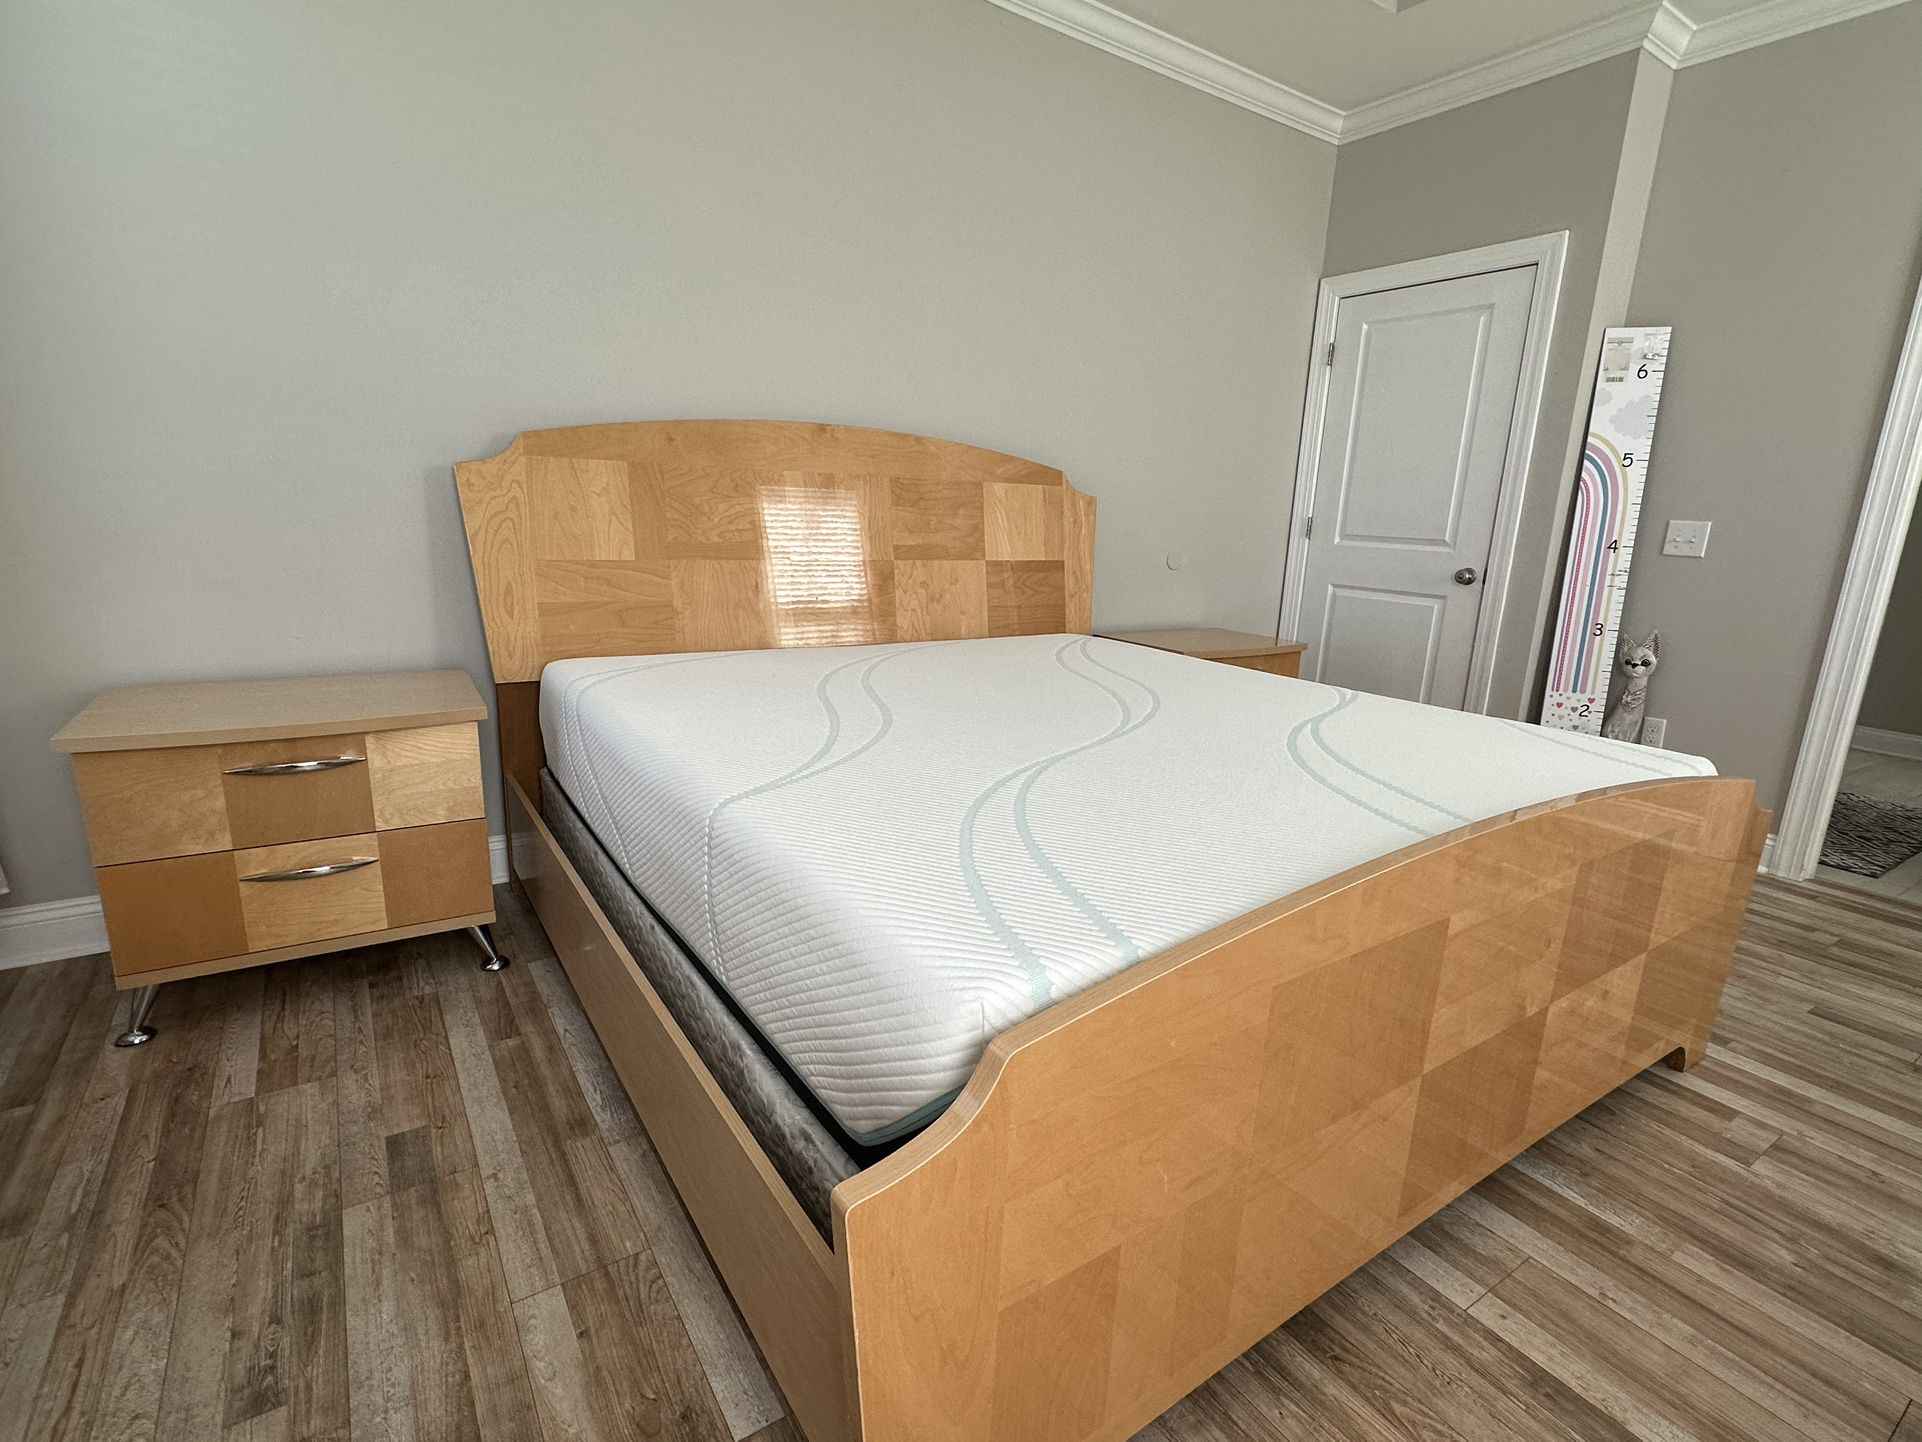 Italian Bedroom Set - Bed Frame, 2 Nightstands, Dresser, Spring Box